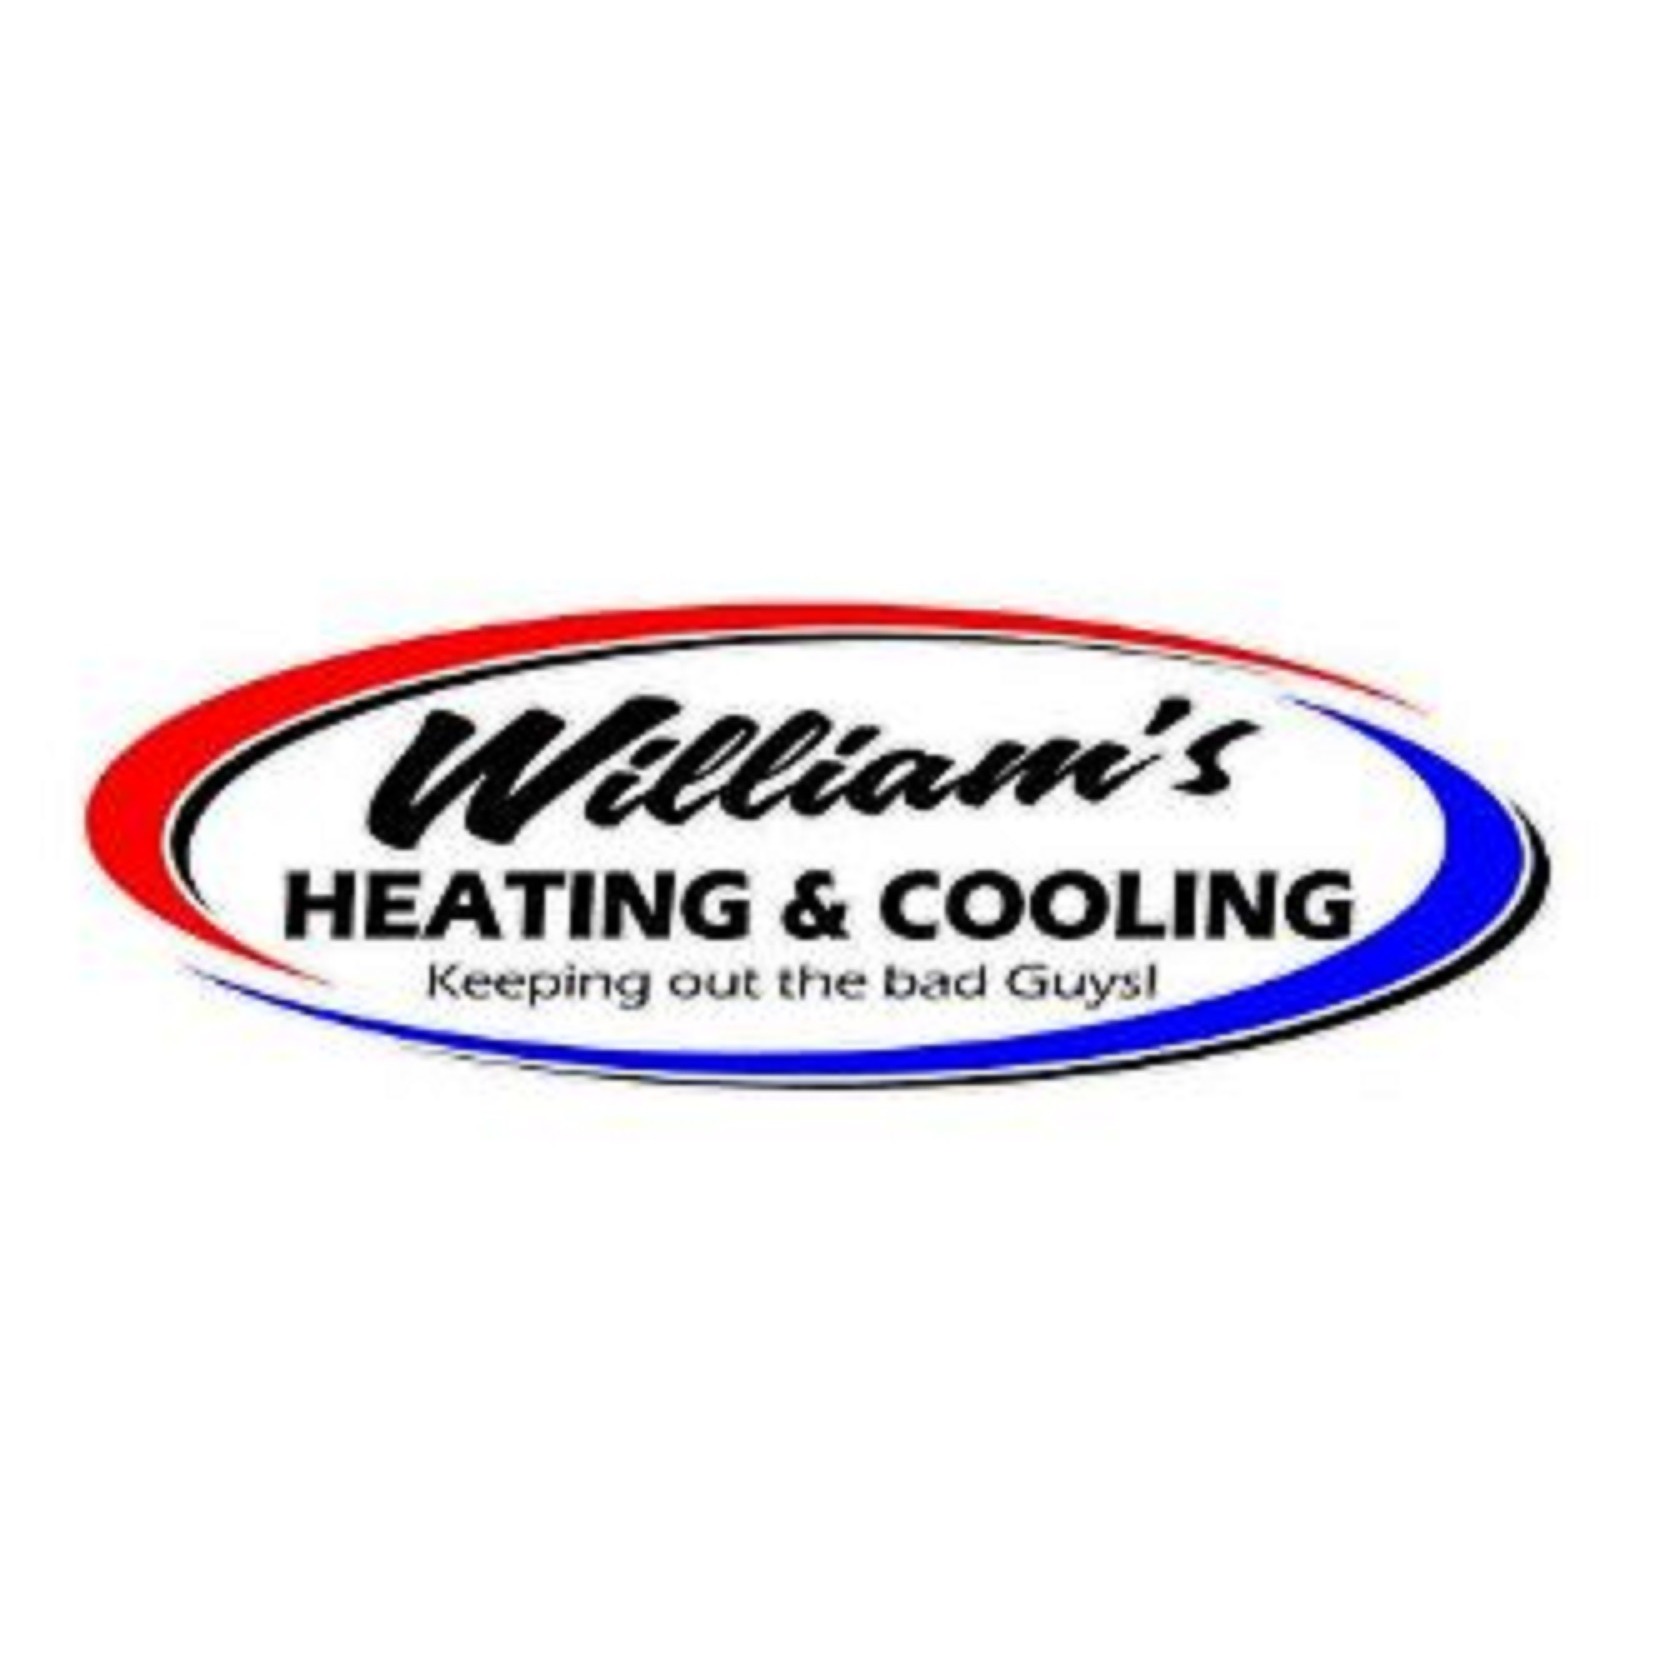 William's Heating - Cooling, Inc. Elsie (989)862-5400